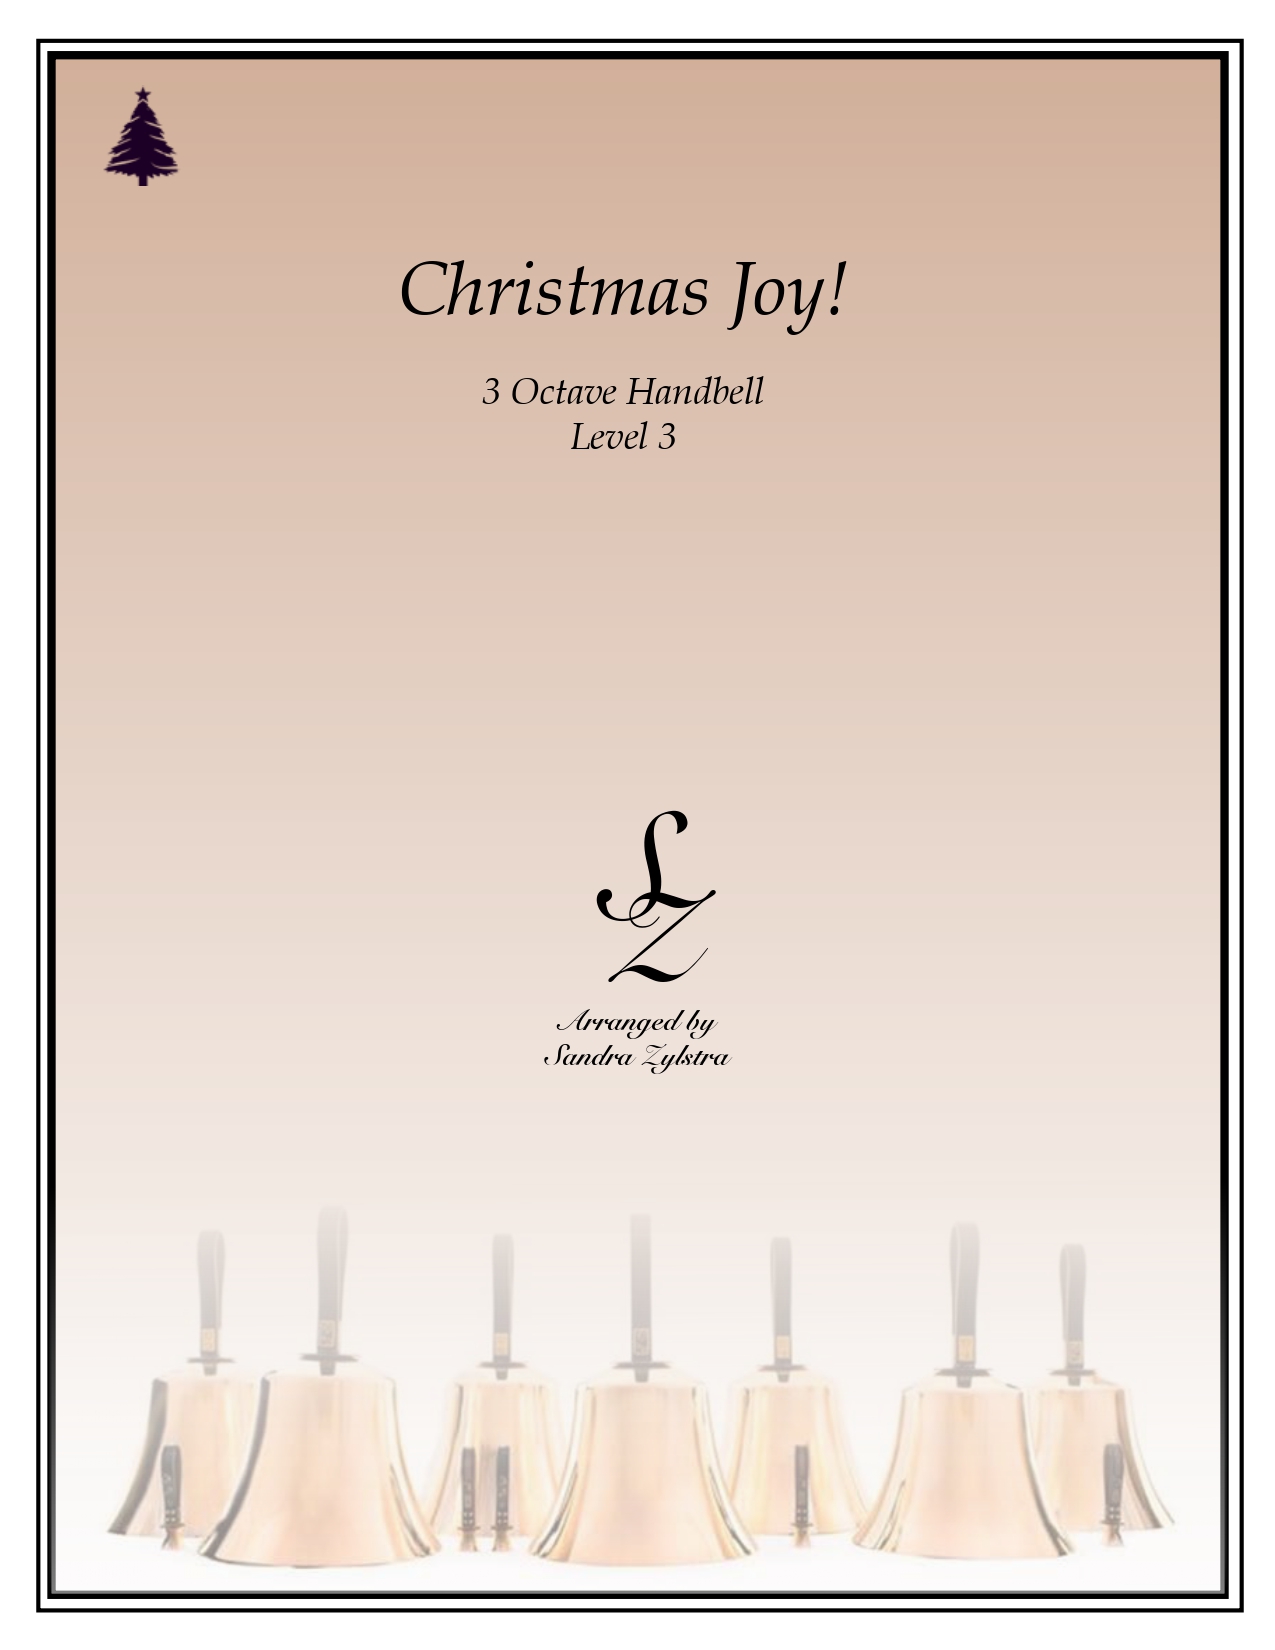 Christmas Joy handbells cover page 00011